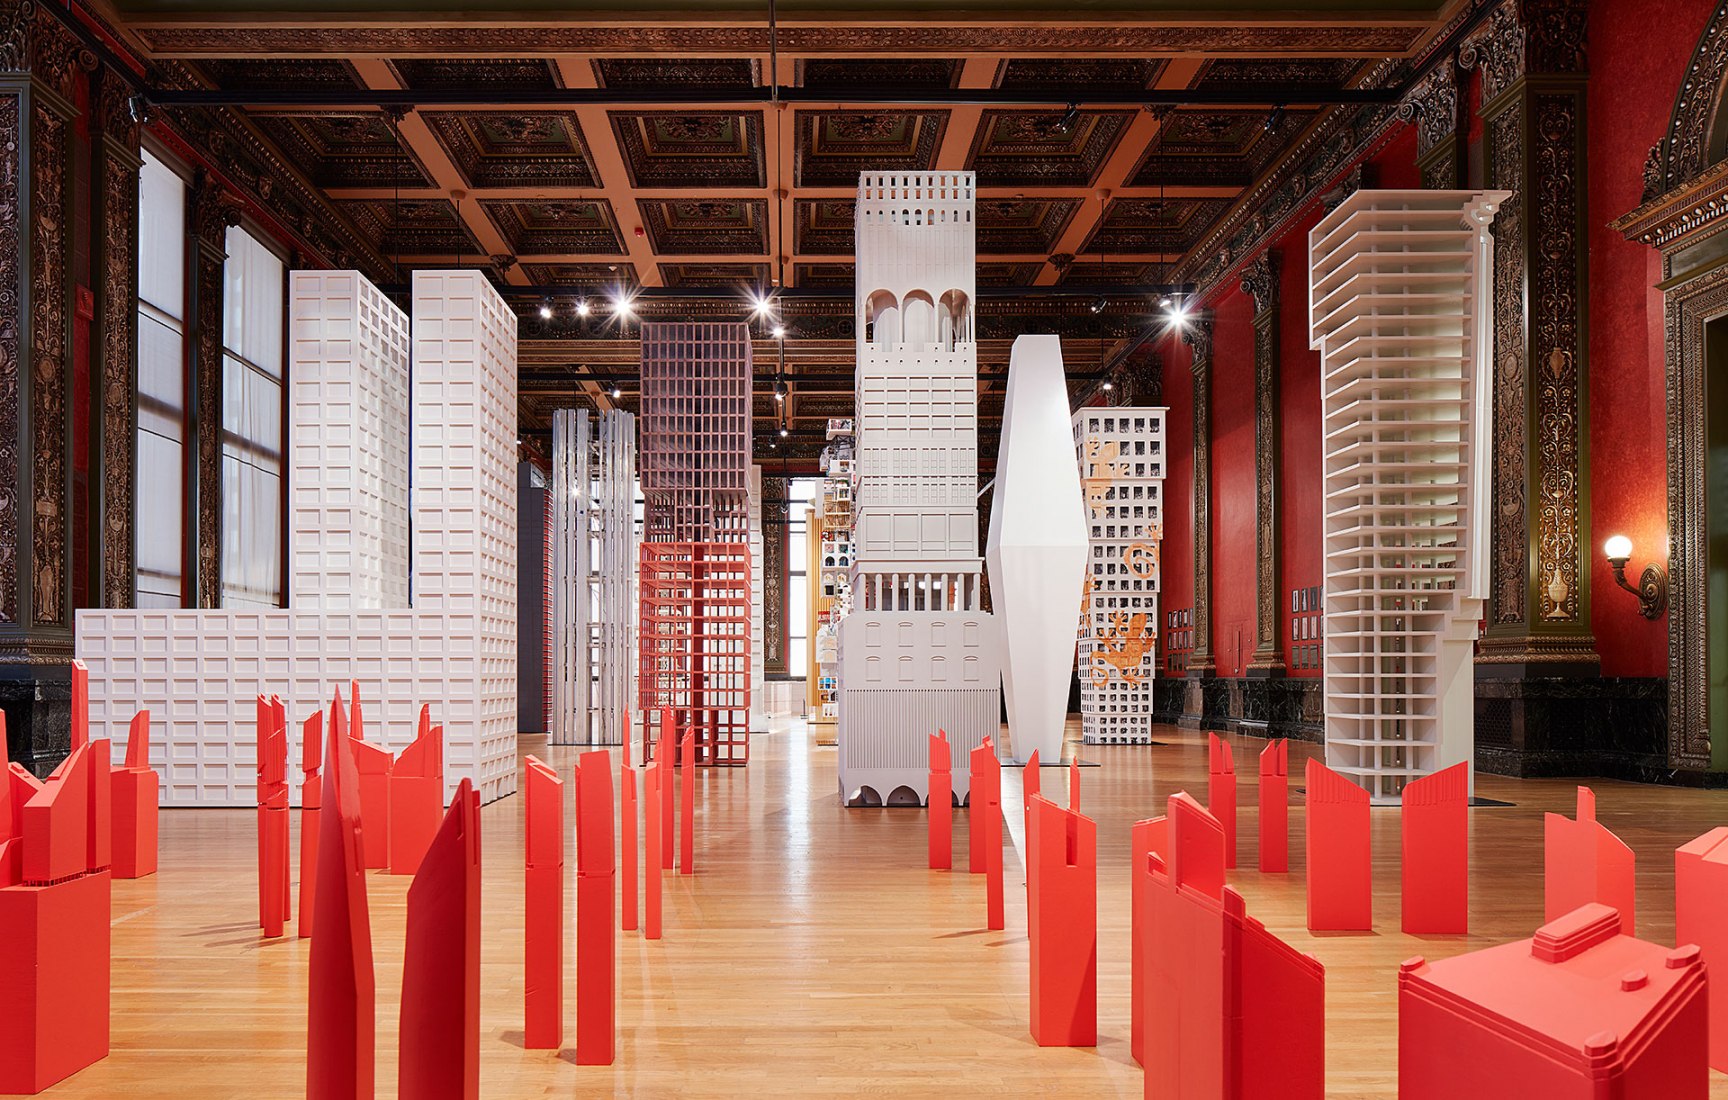 Vertical City exposición en Chicago Architecture Biennial 2017. Fotografía por Steven Hall